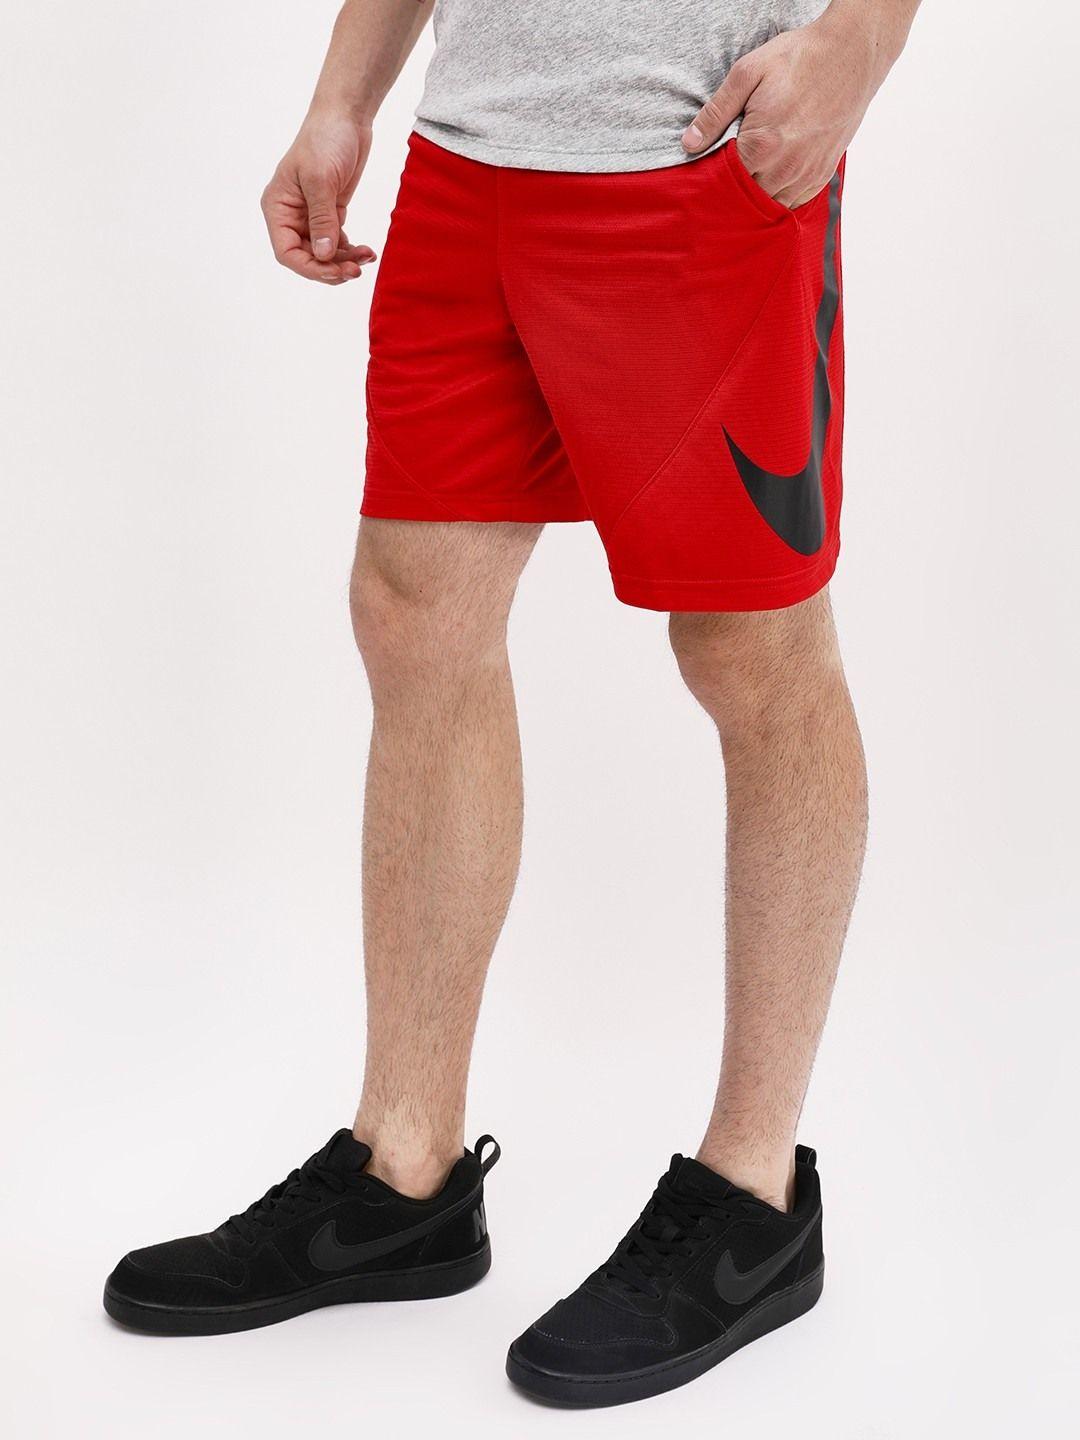 Red Swoosh Logo - Buy Nike Red Swoosh Logo Shorts for Men Online in India